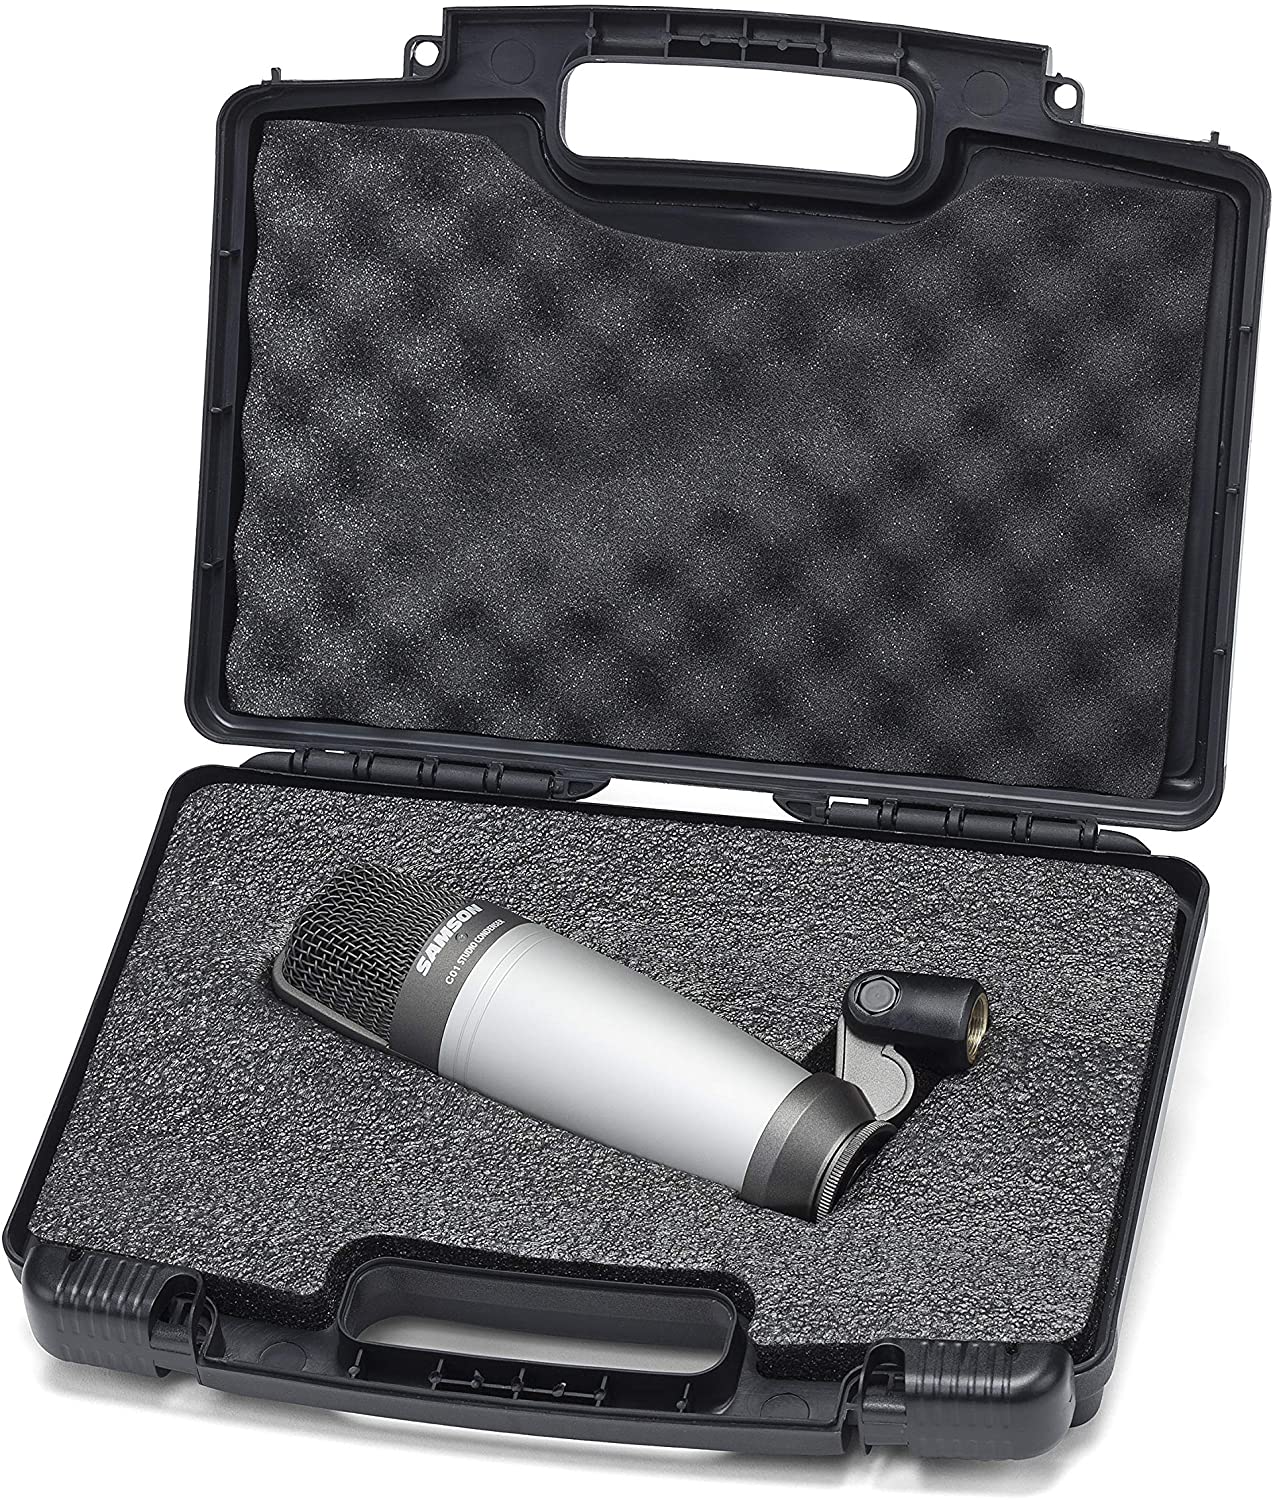 Samson C01 Large-Diaphragm Microphone and SR850 Semi Open-Back Headphones Bundle - Pro-Distributing